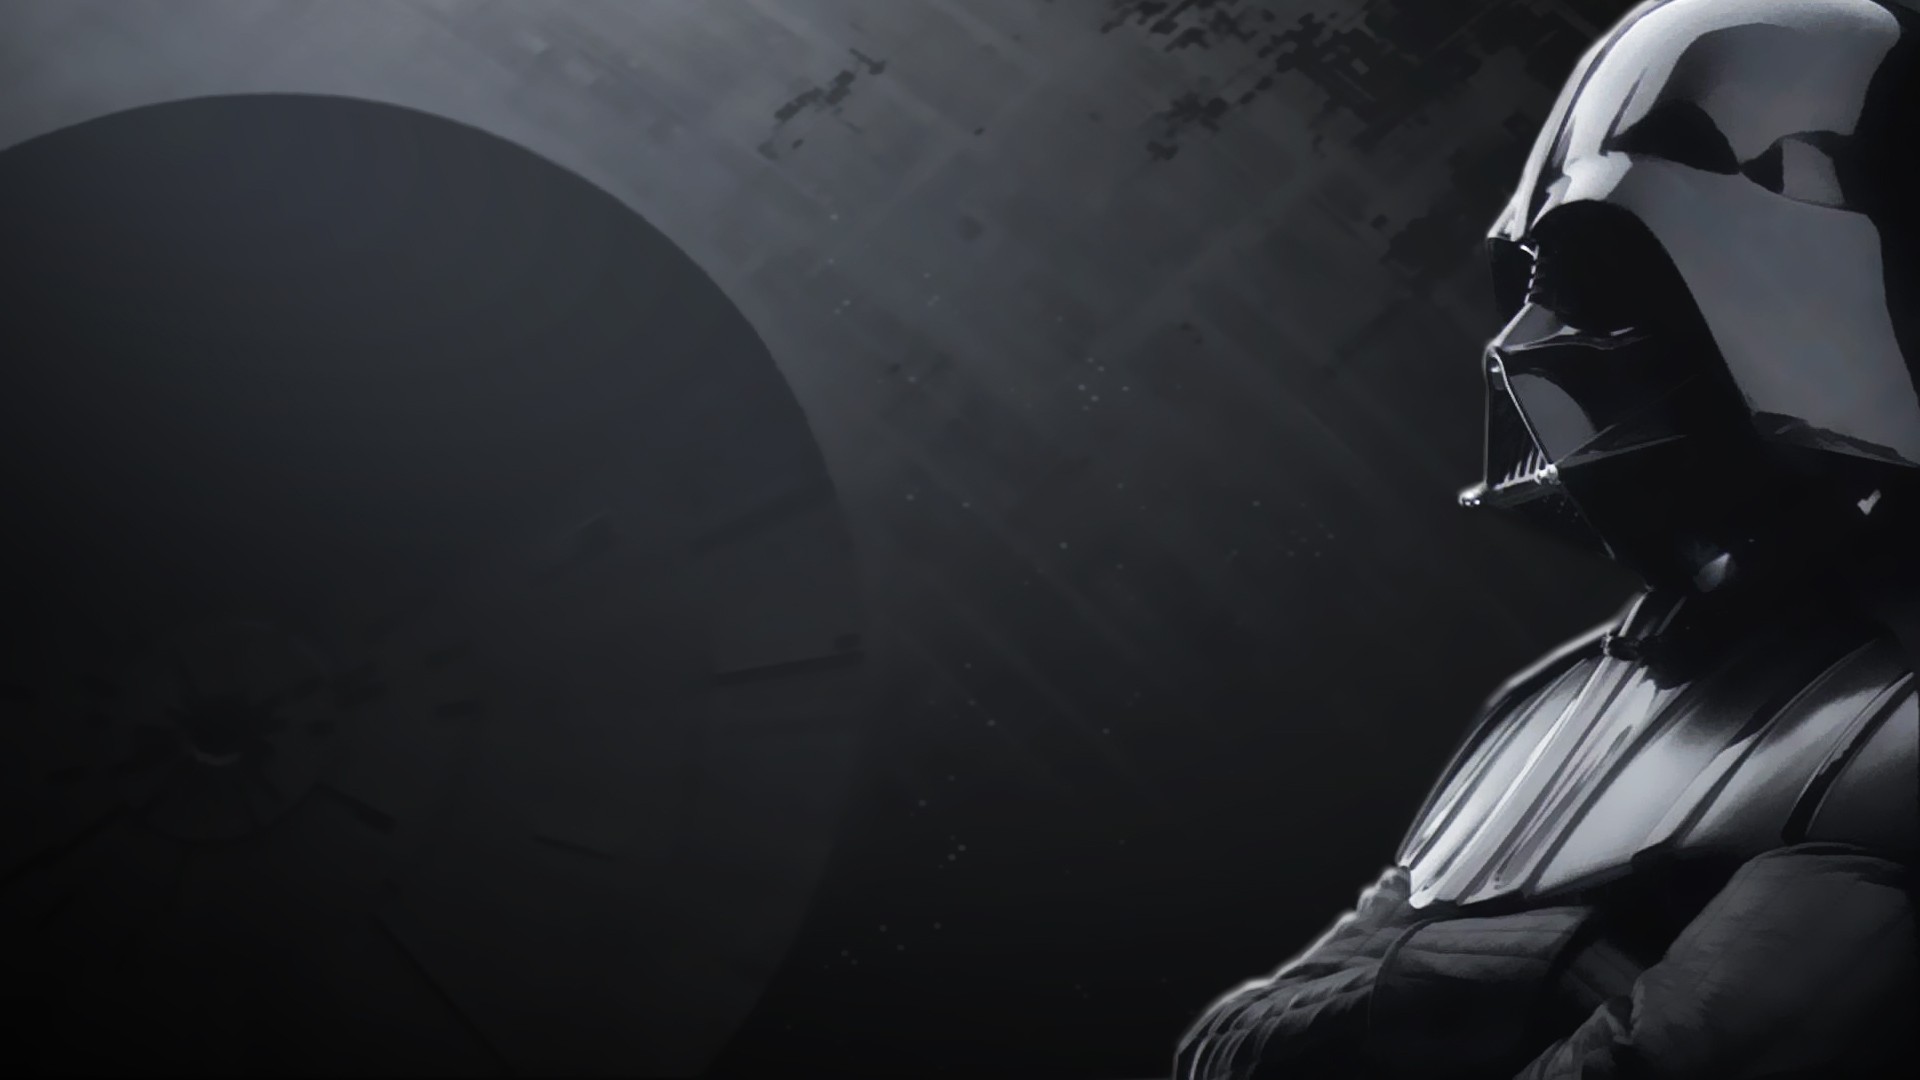 Desktop Wallpaper Darth Vader Dark, Hd Image, Picture, Background, Crybf0